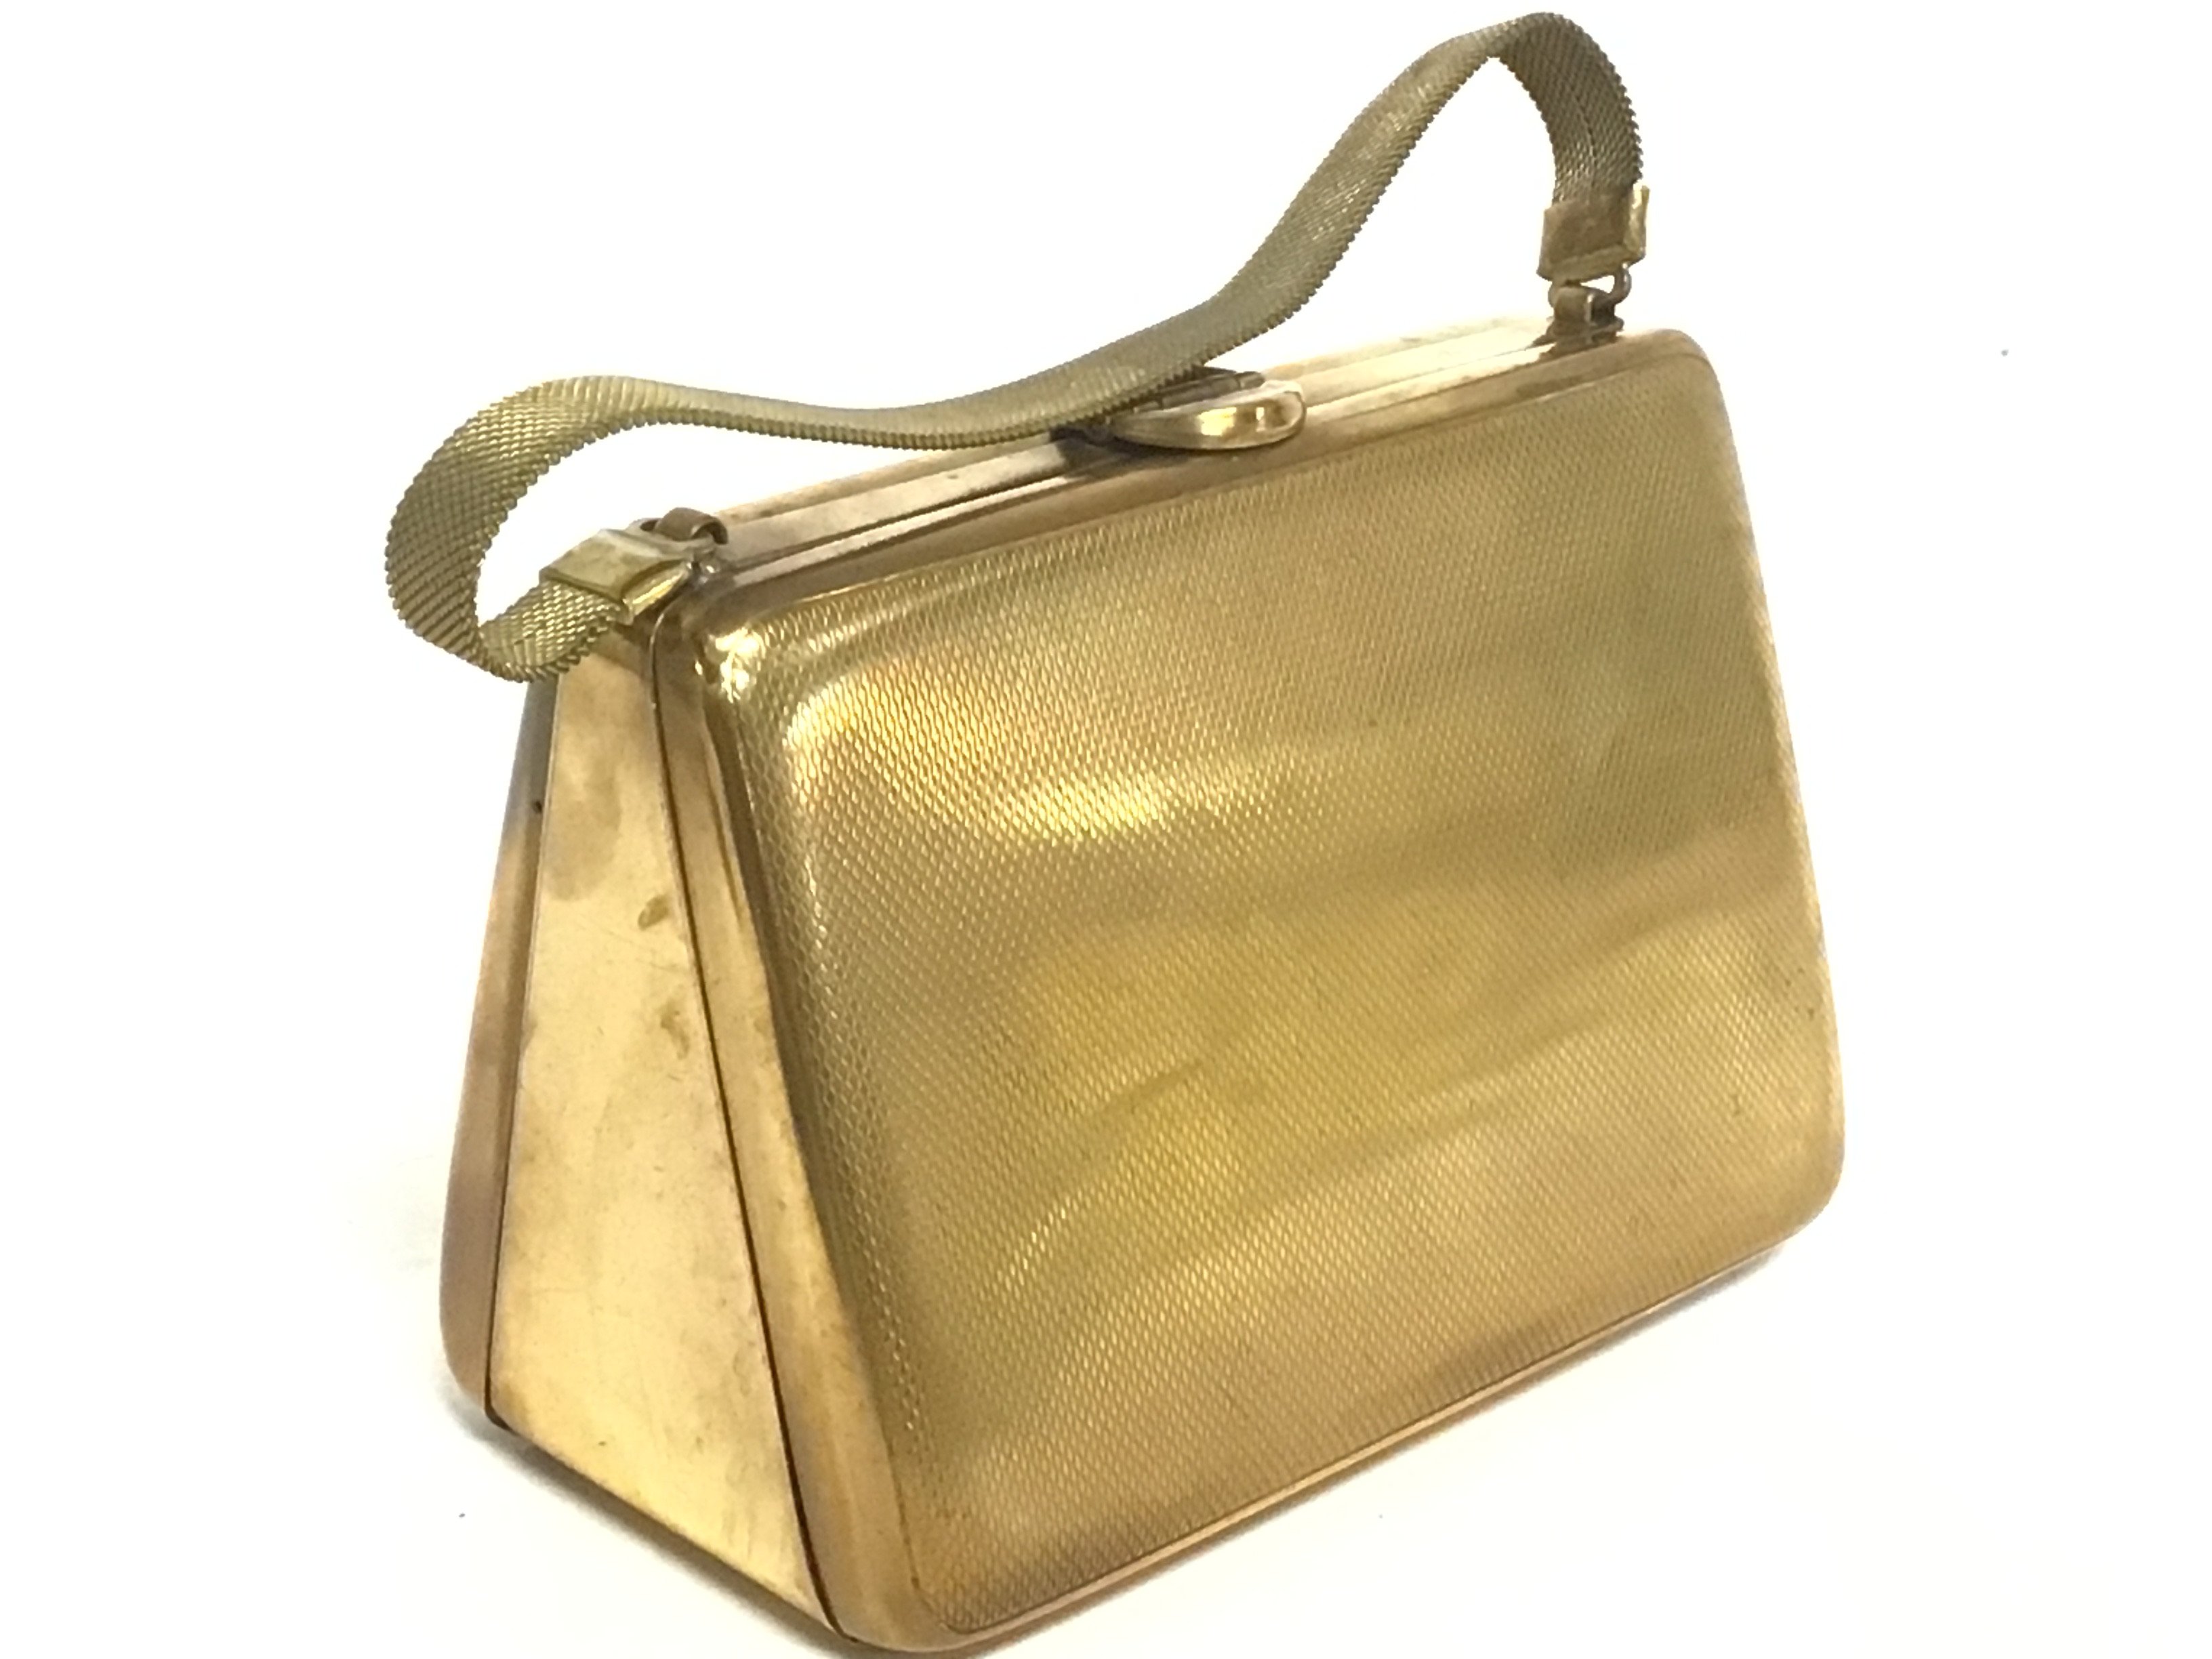 A vintage handbag design compact with makeup and a